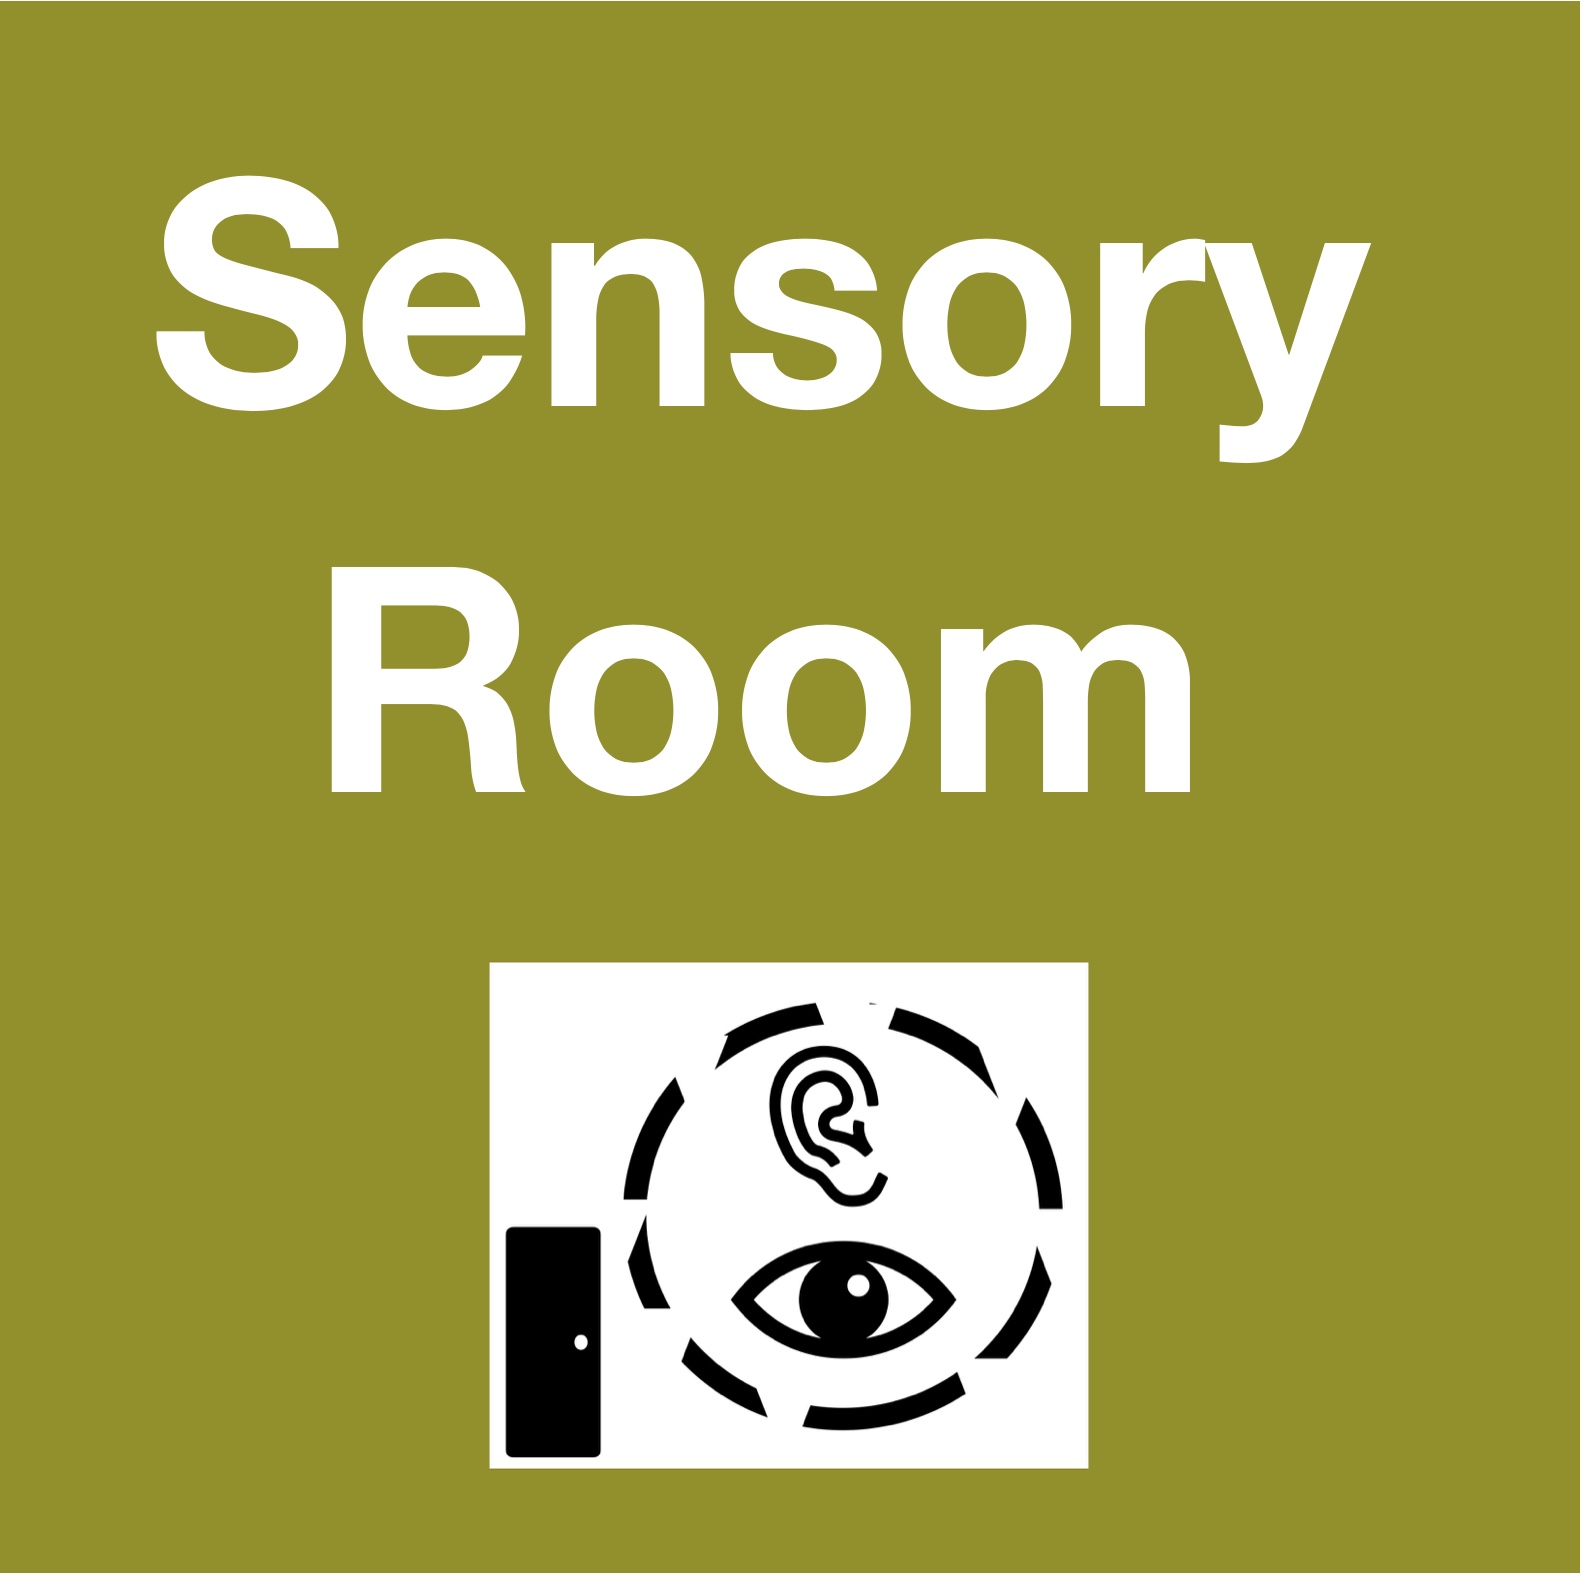 Sensory Room